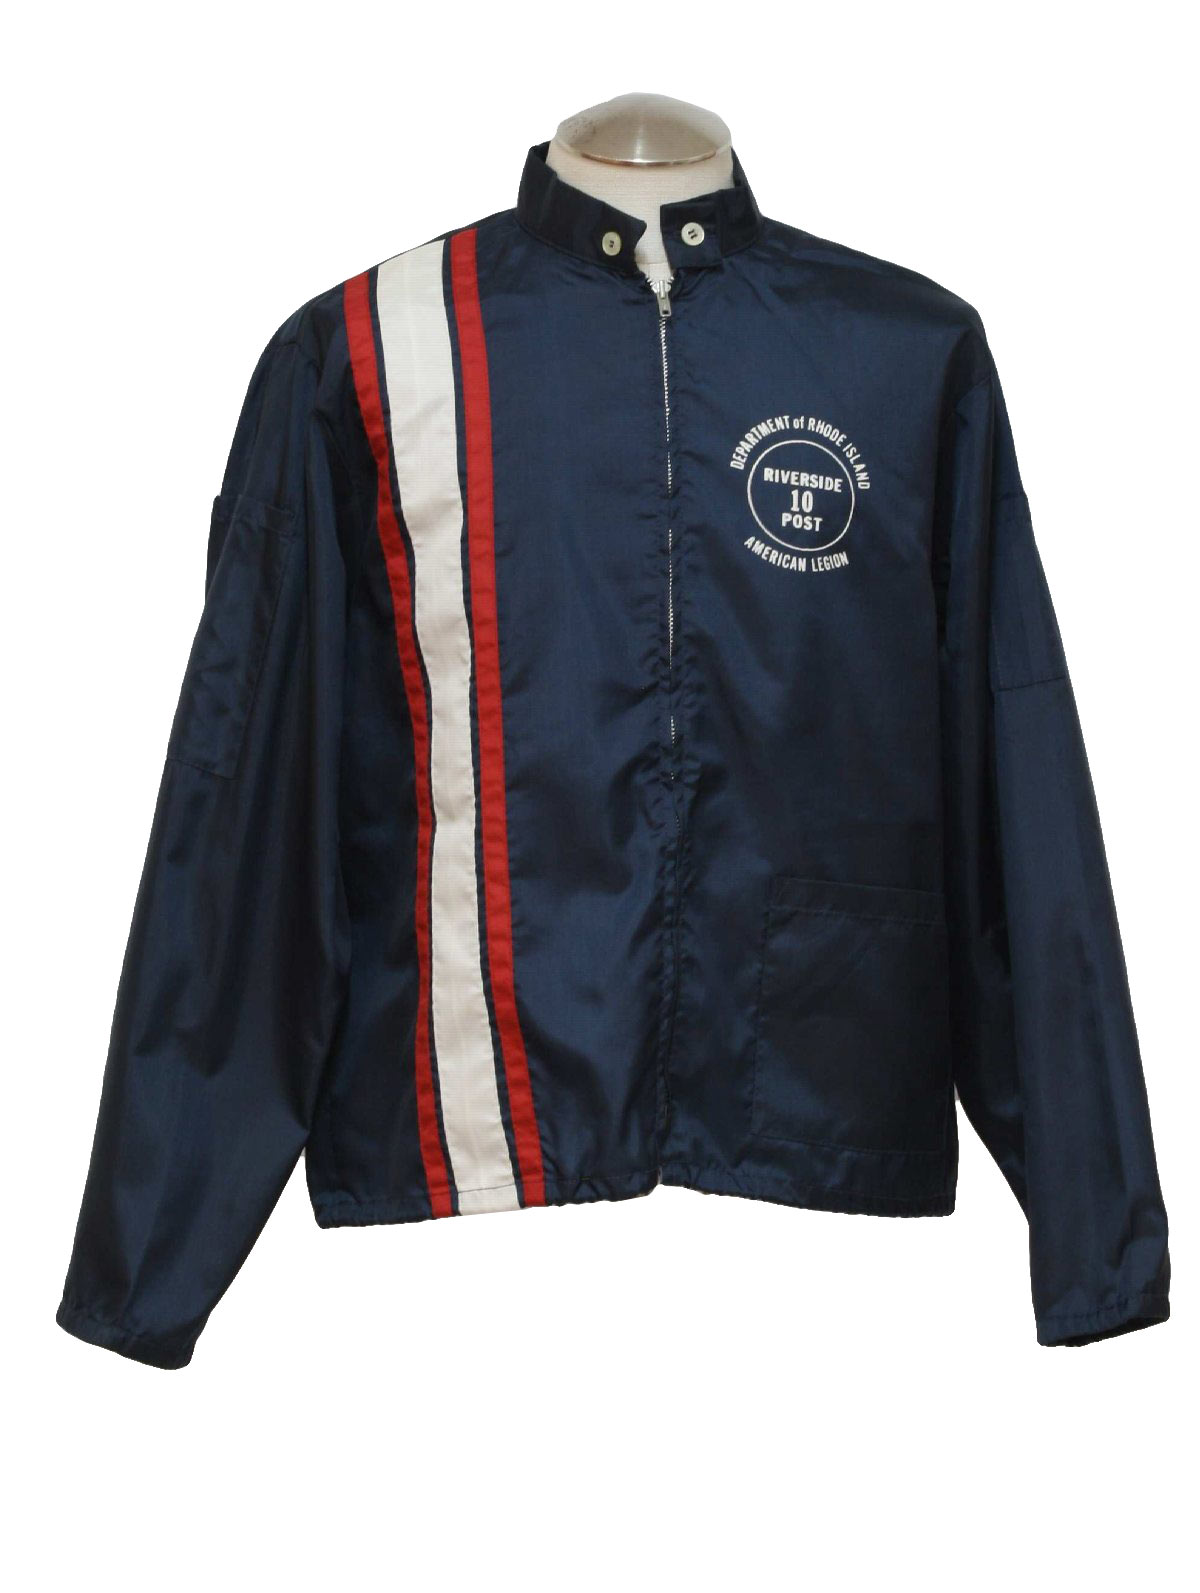 Retro 1970s Jacket: 70s -Pla Jac- Mens navy blue, red and white nylon ...